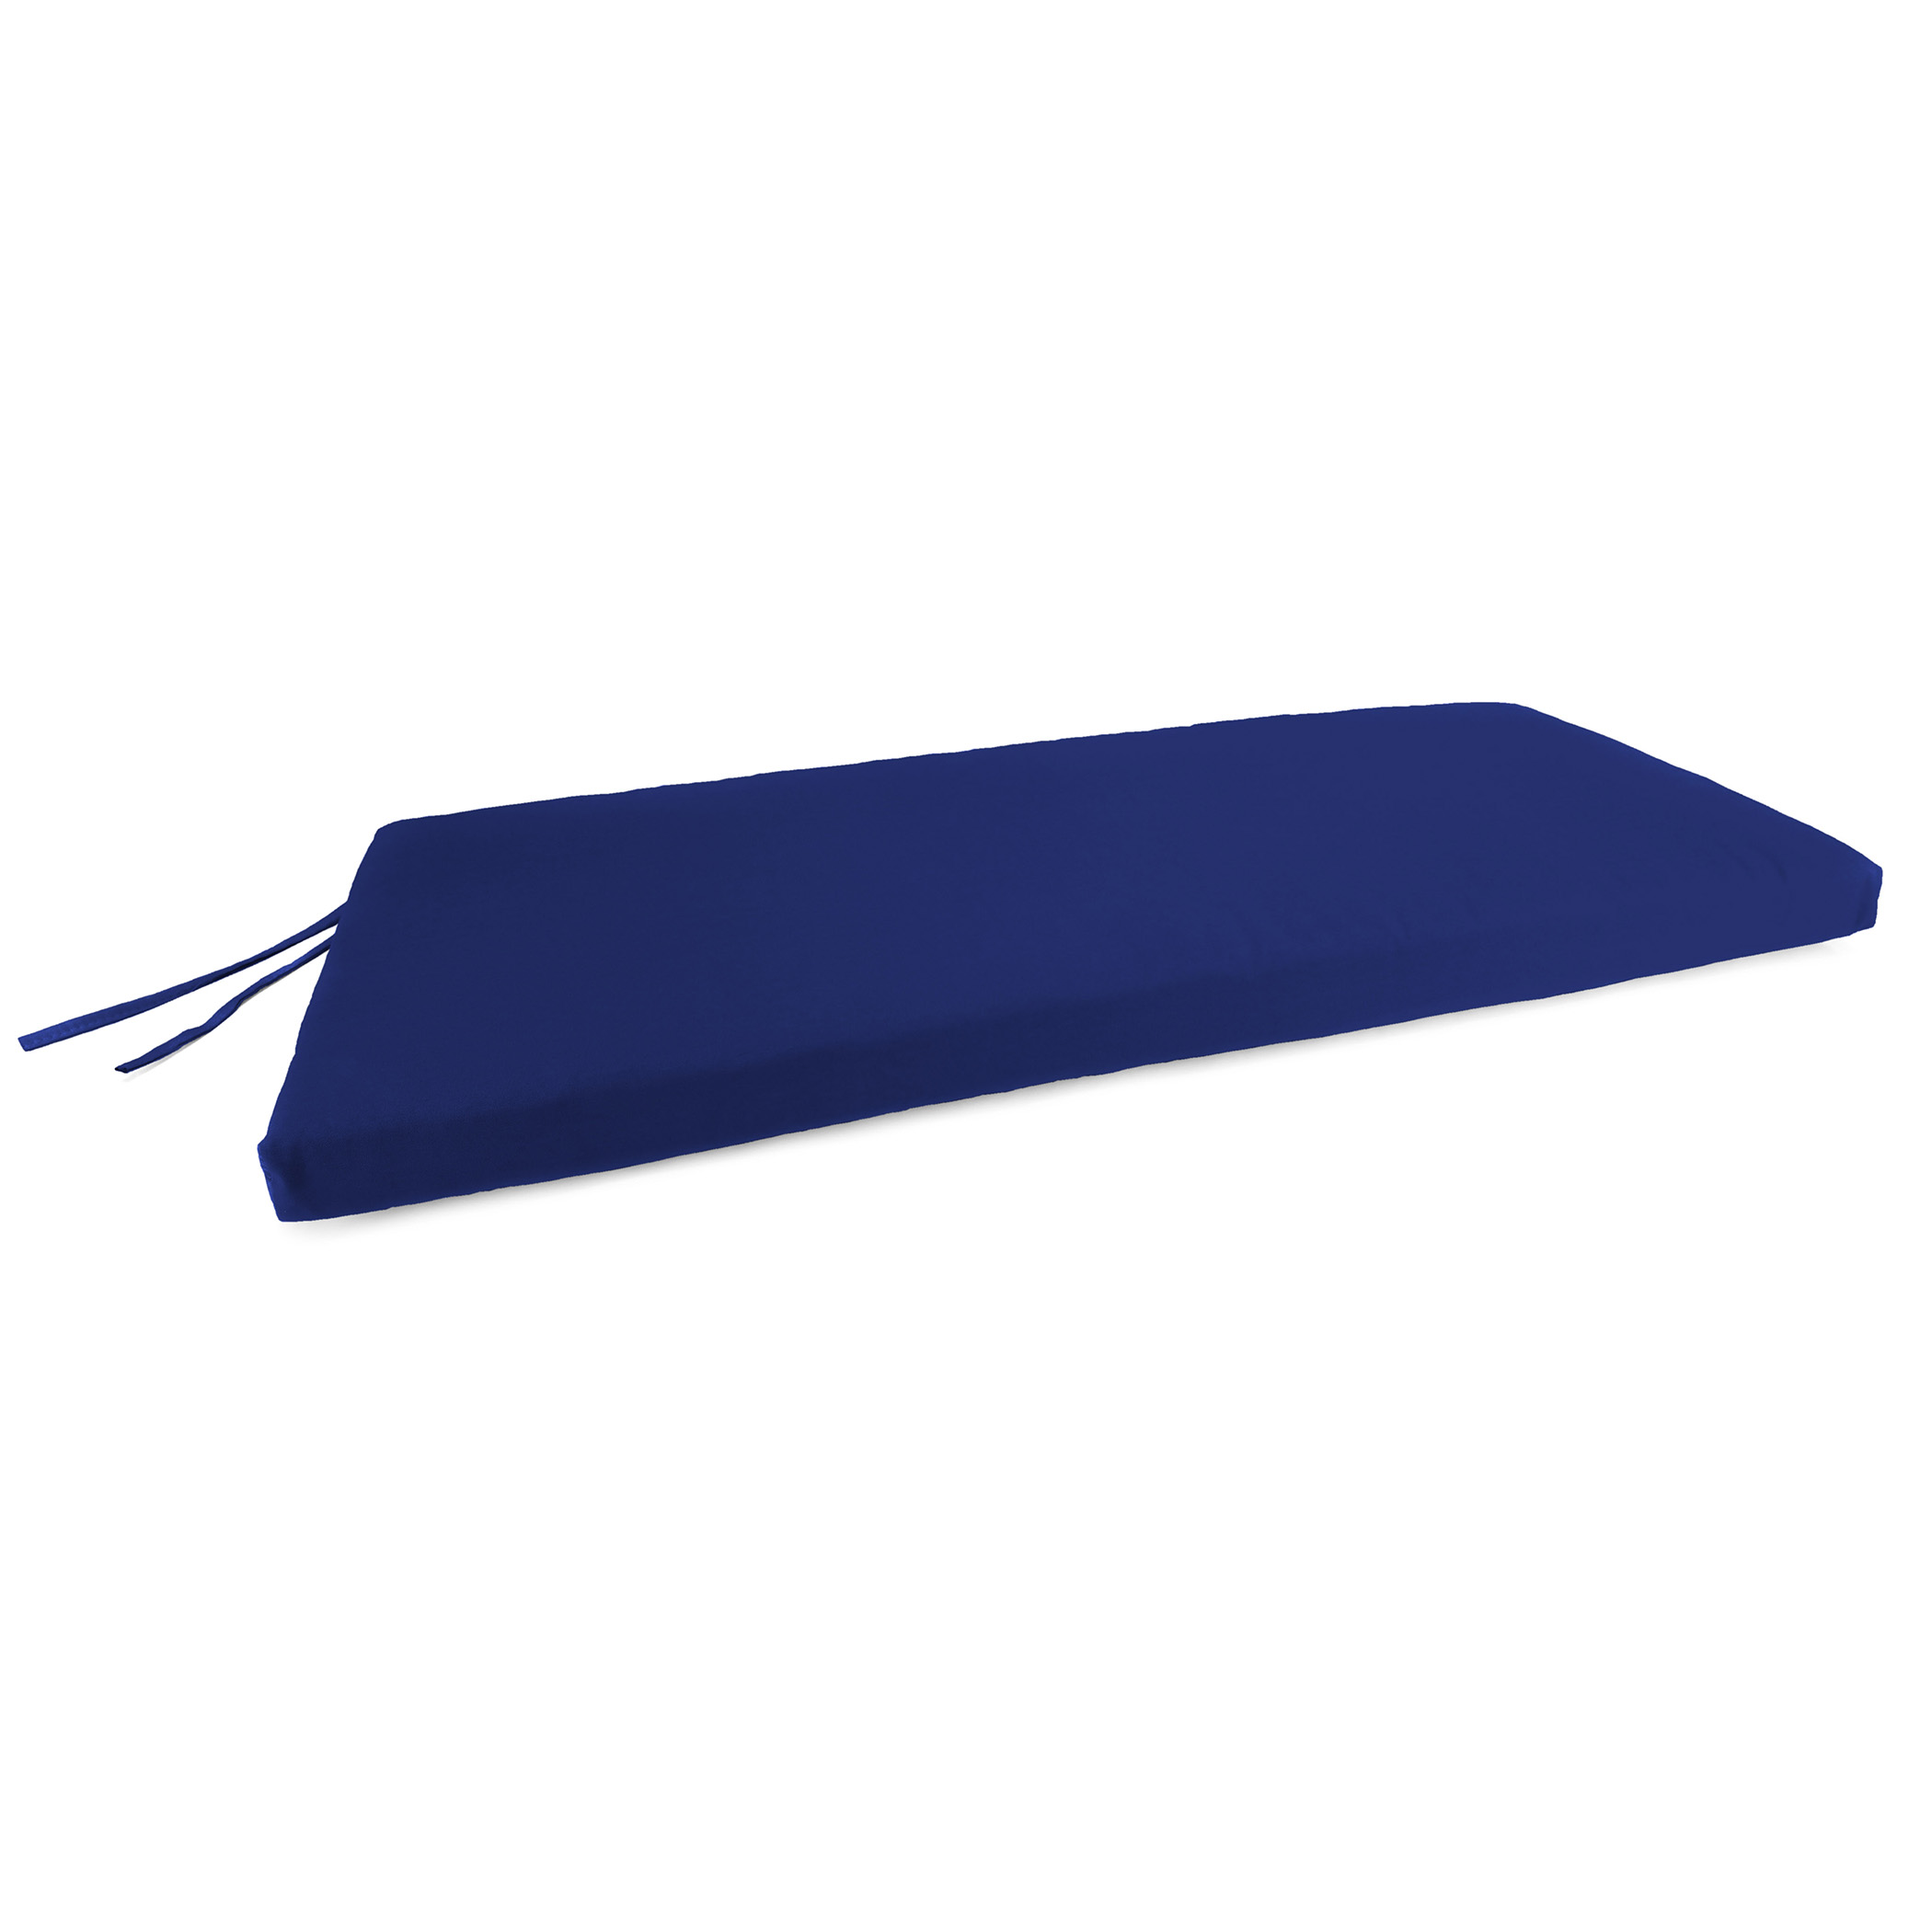 Jordan Manufacturing 45" x 18" Veranda Cobalt Blue Solid Rectangular Outdoor Glider Bench Cushion with Ties - image 1 of 10